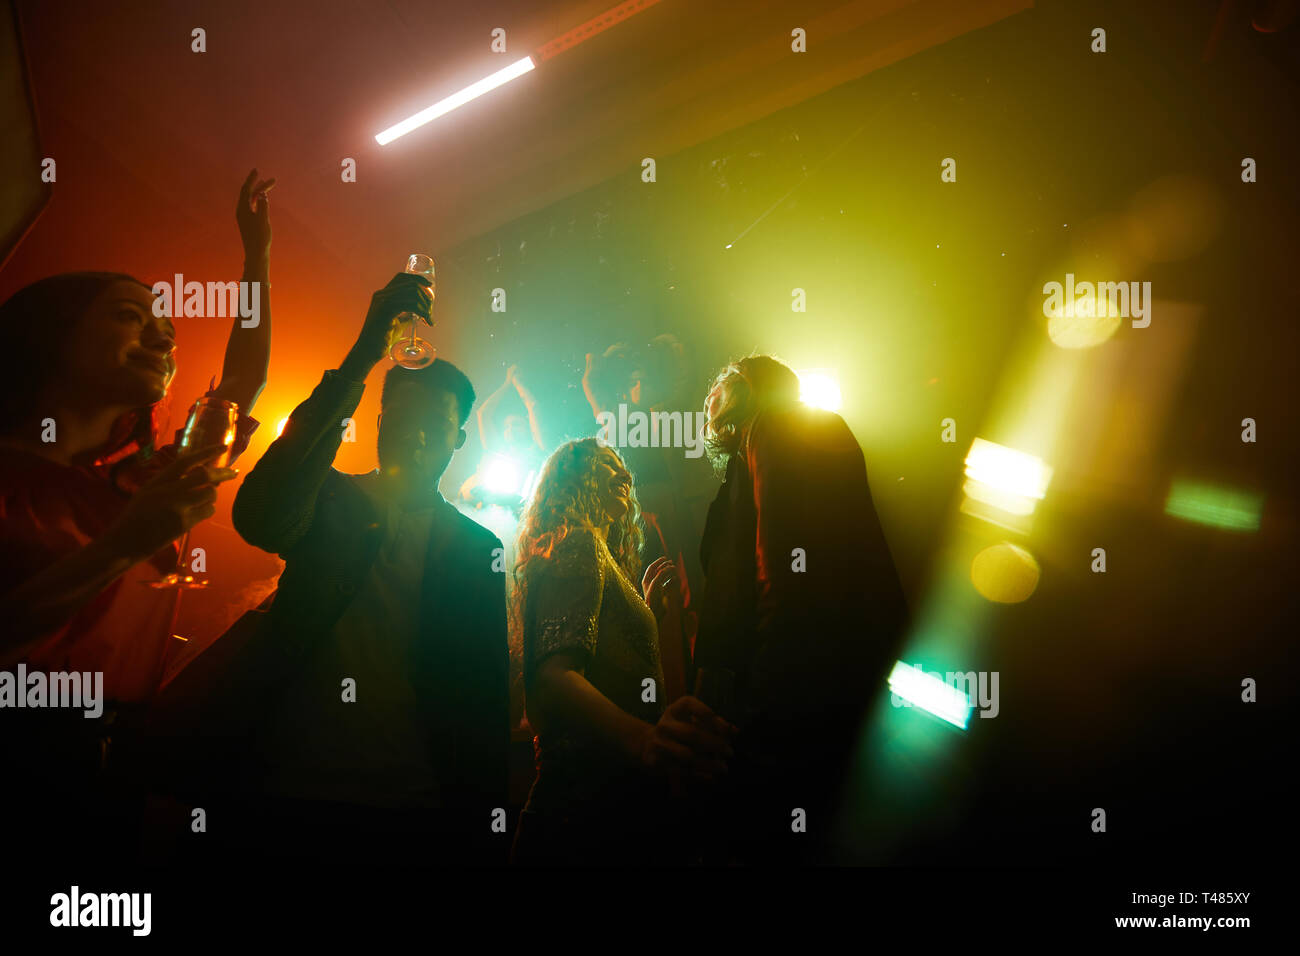 People dancing in disco lights Banque D'Images